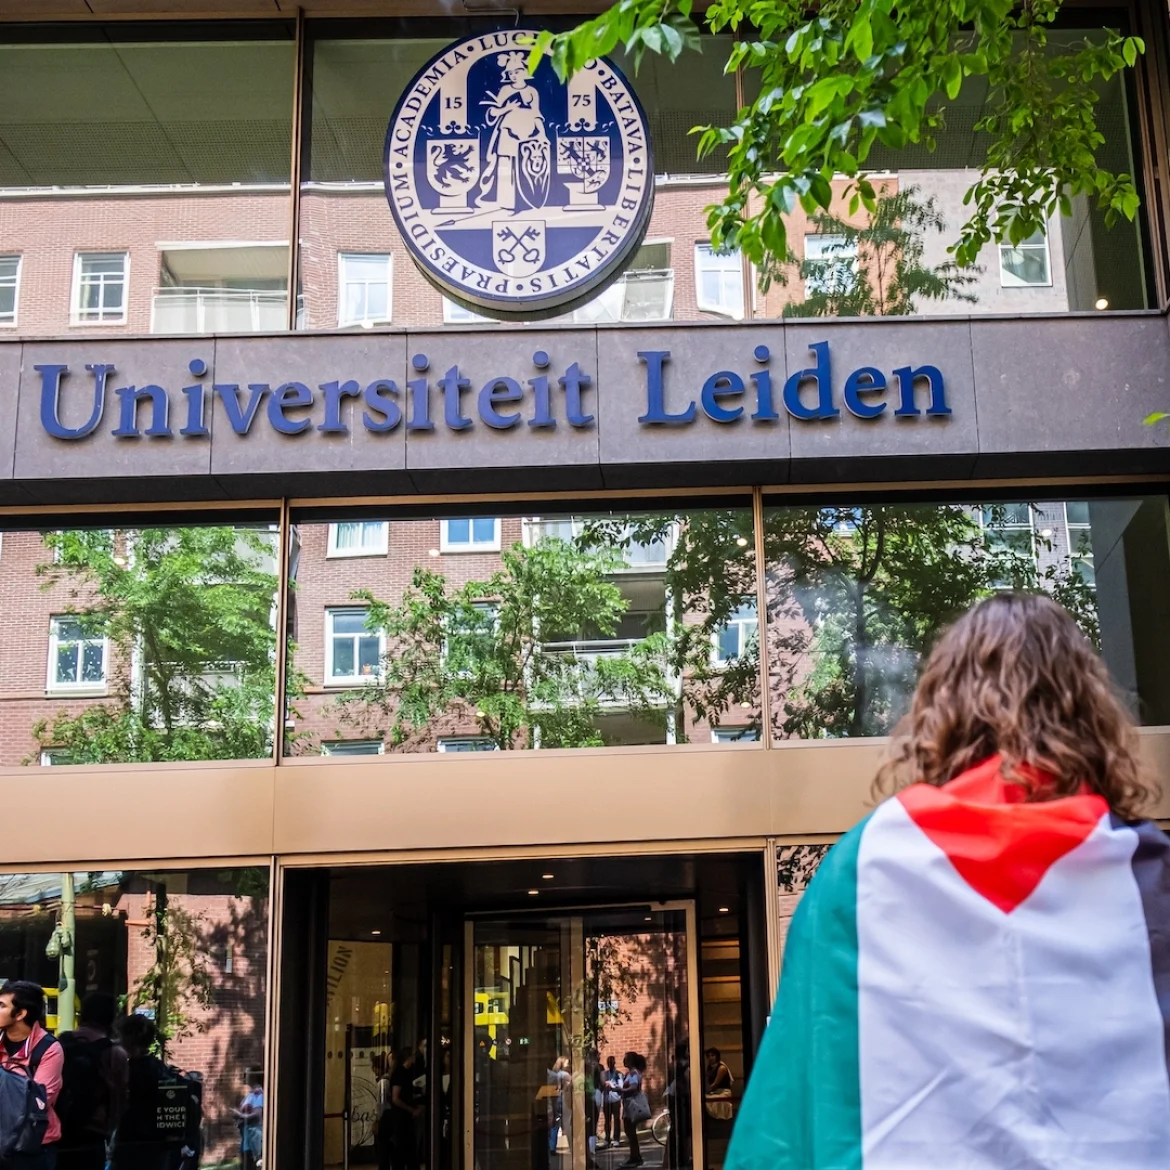 Betogers bezetten pand Universiteit Leiden in Den Haag